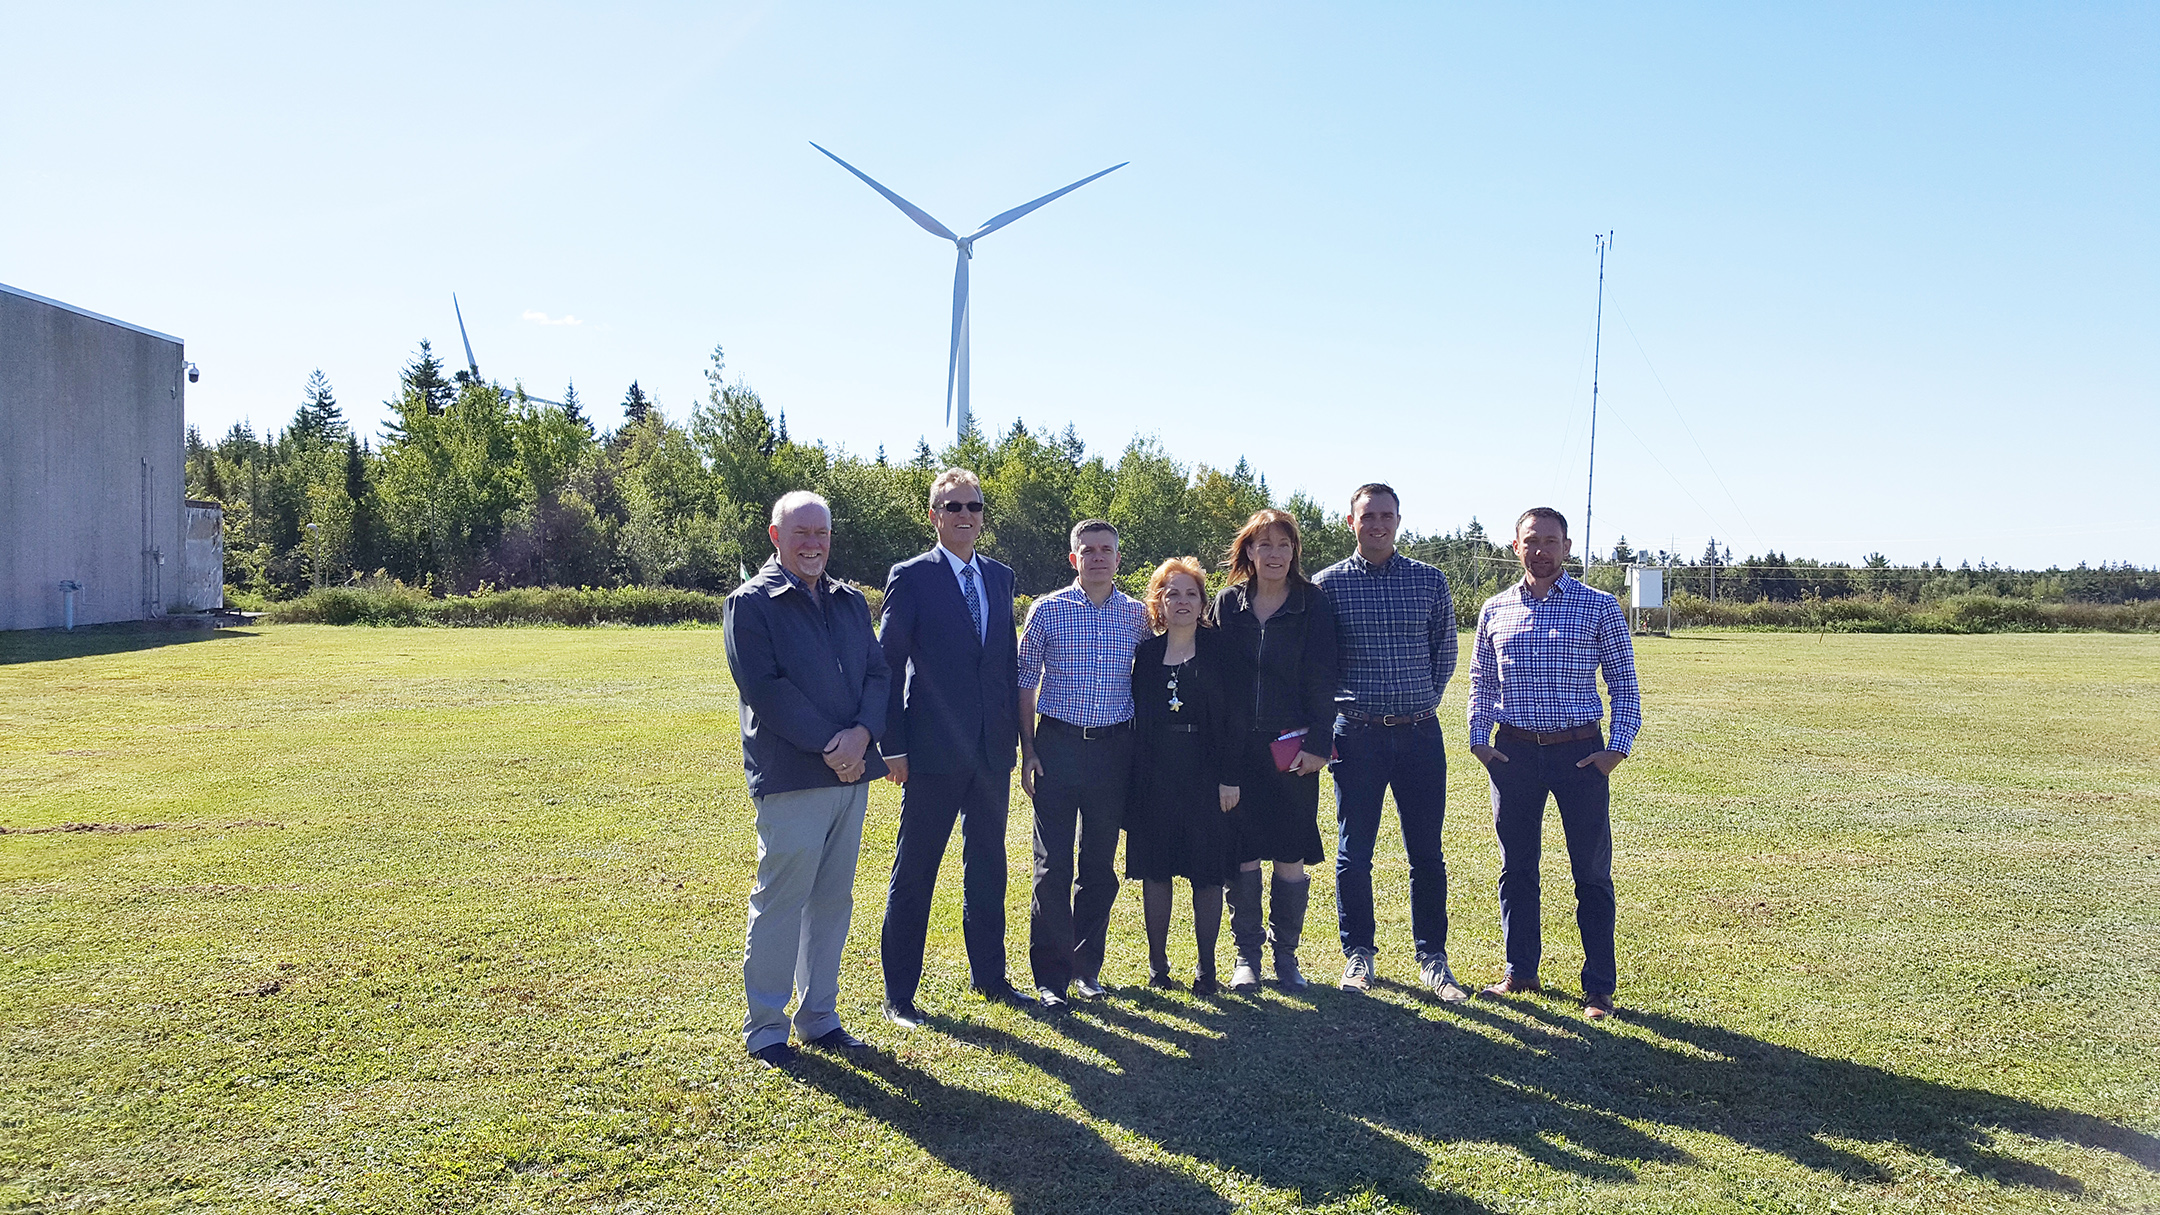 Pockwock wind turbine group photo